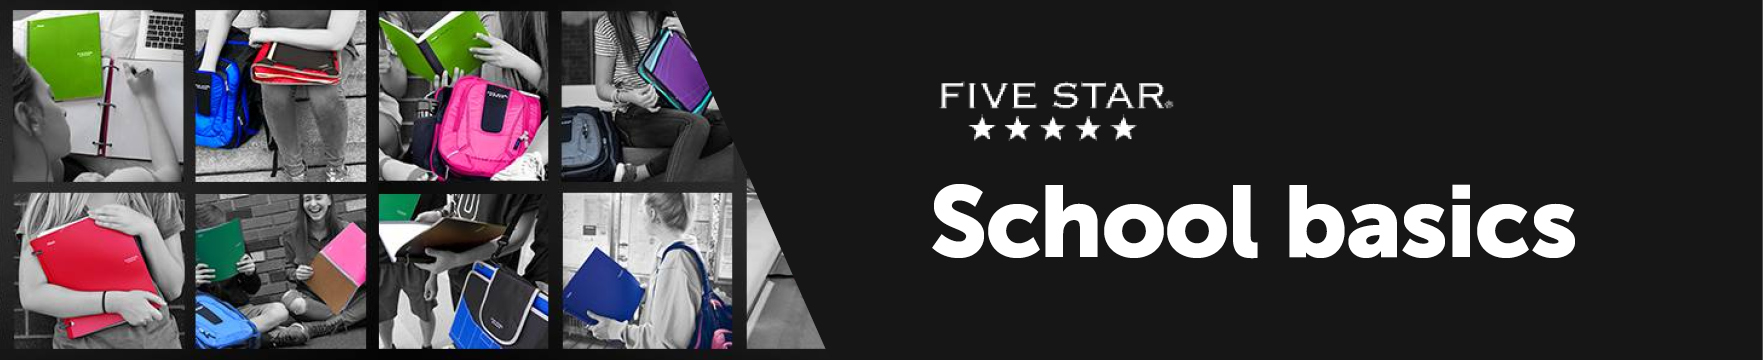 Five Star. School basics.